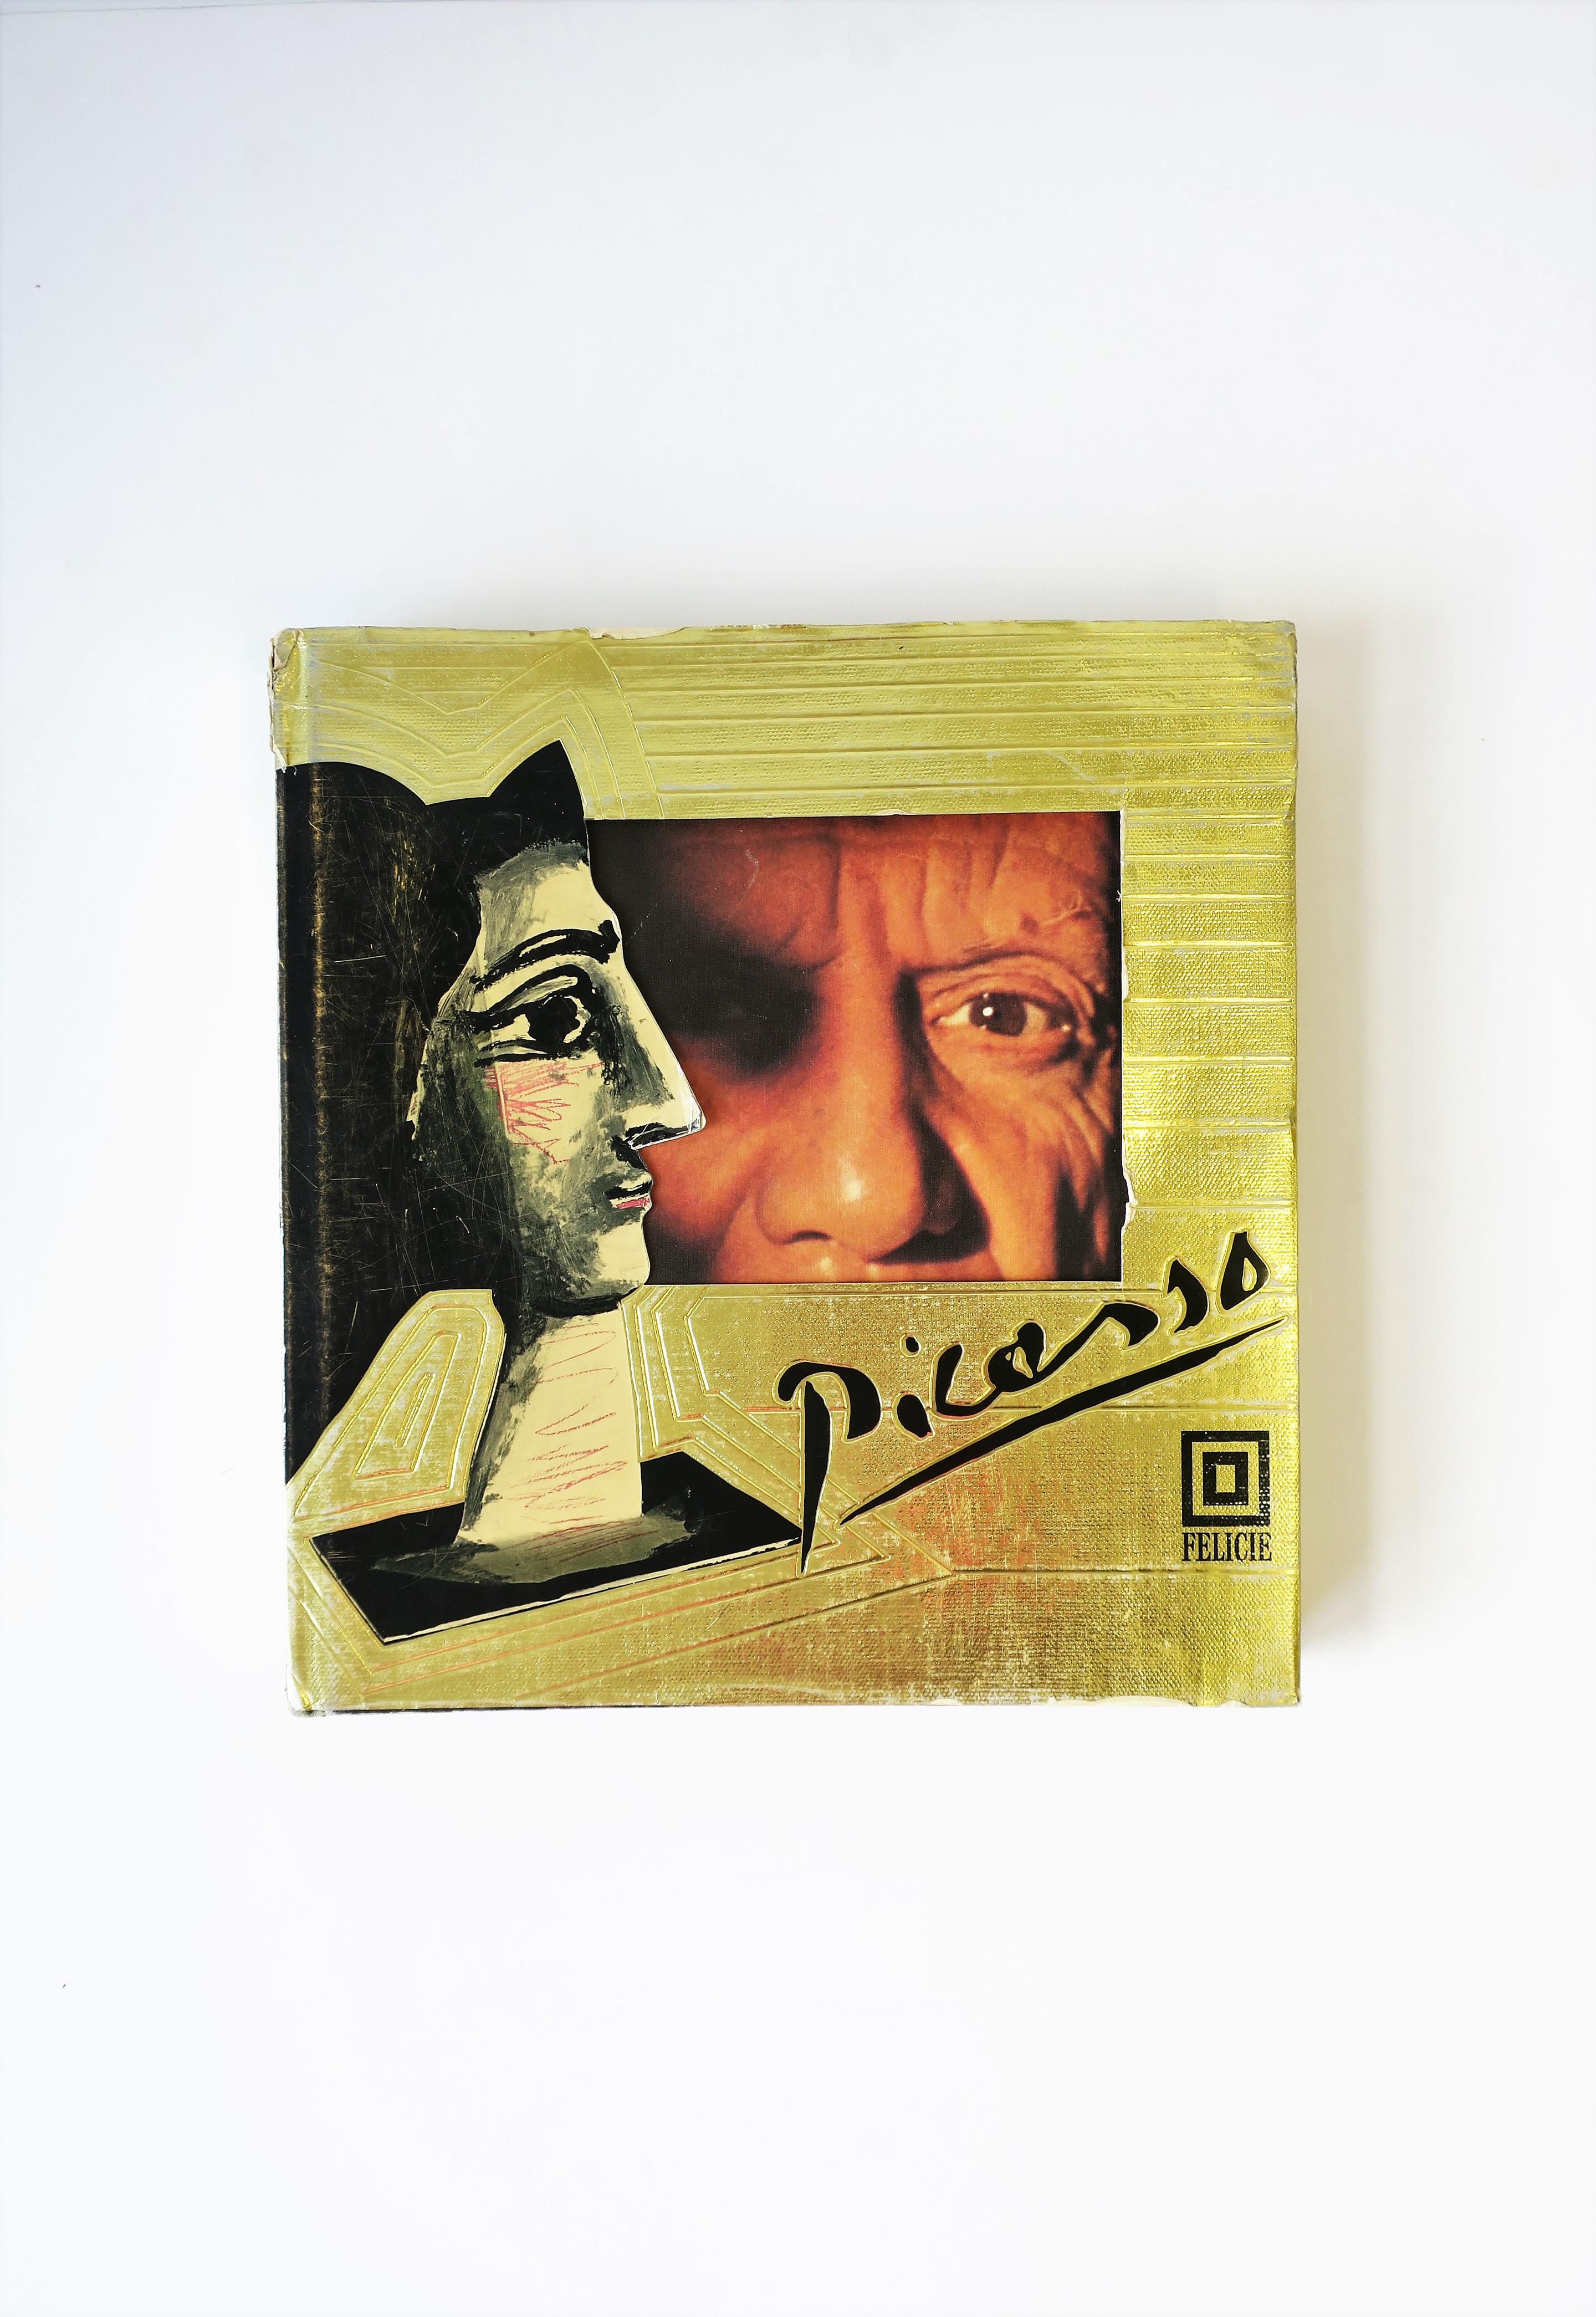 The amazing 'Picasso FELICIE', 